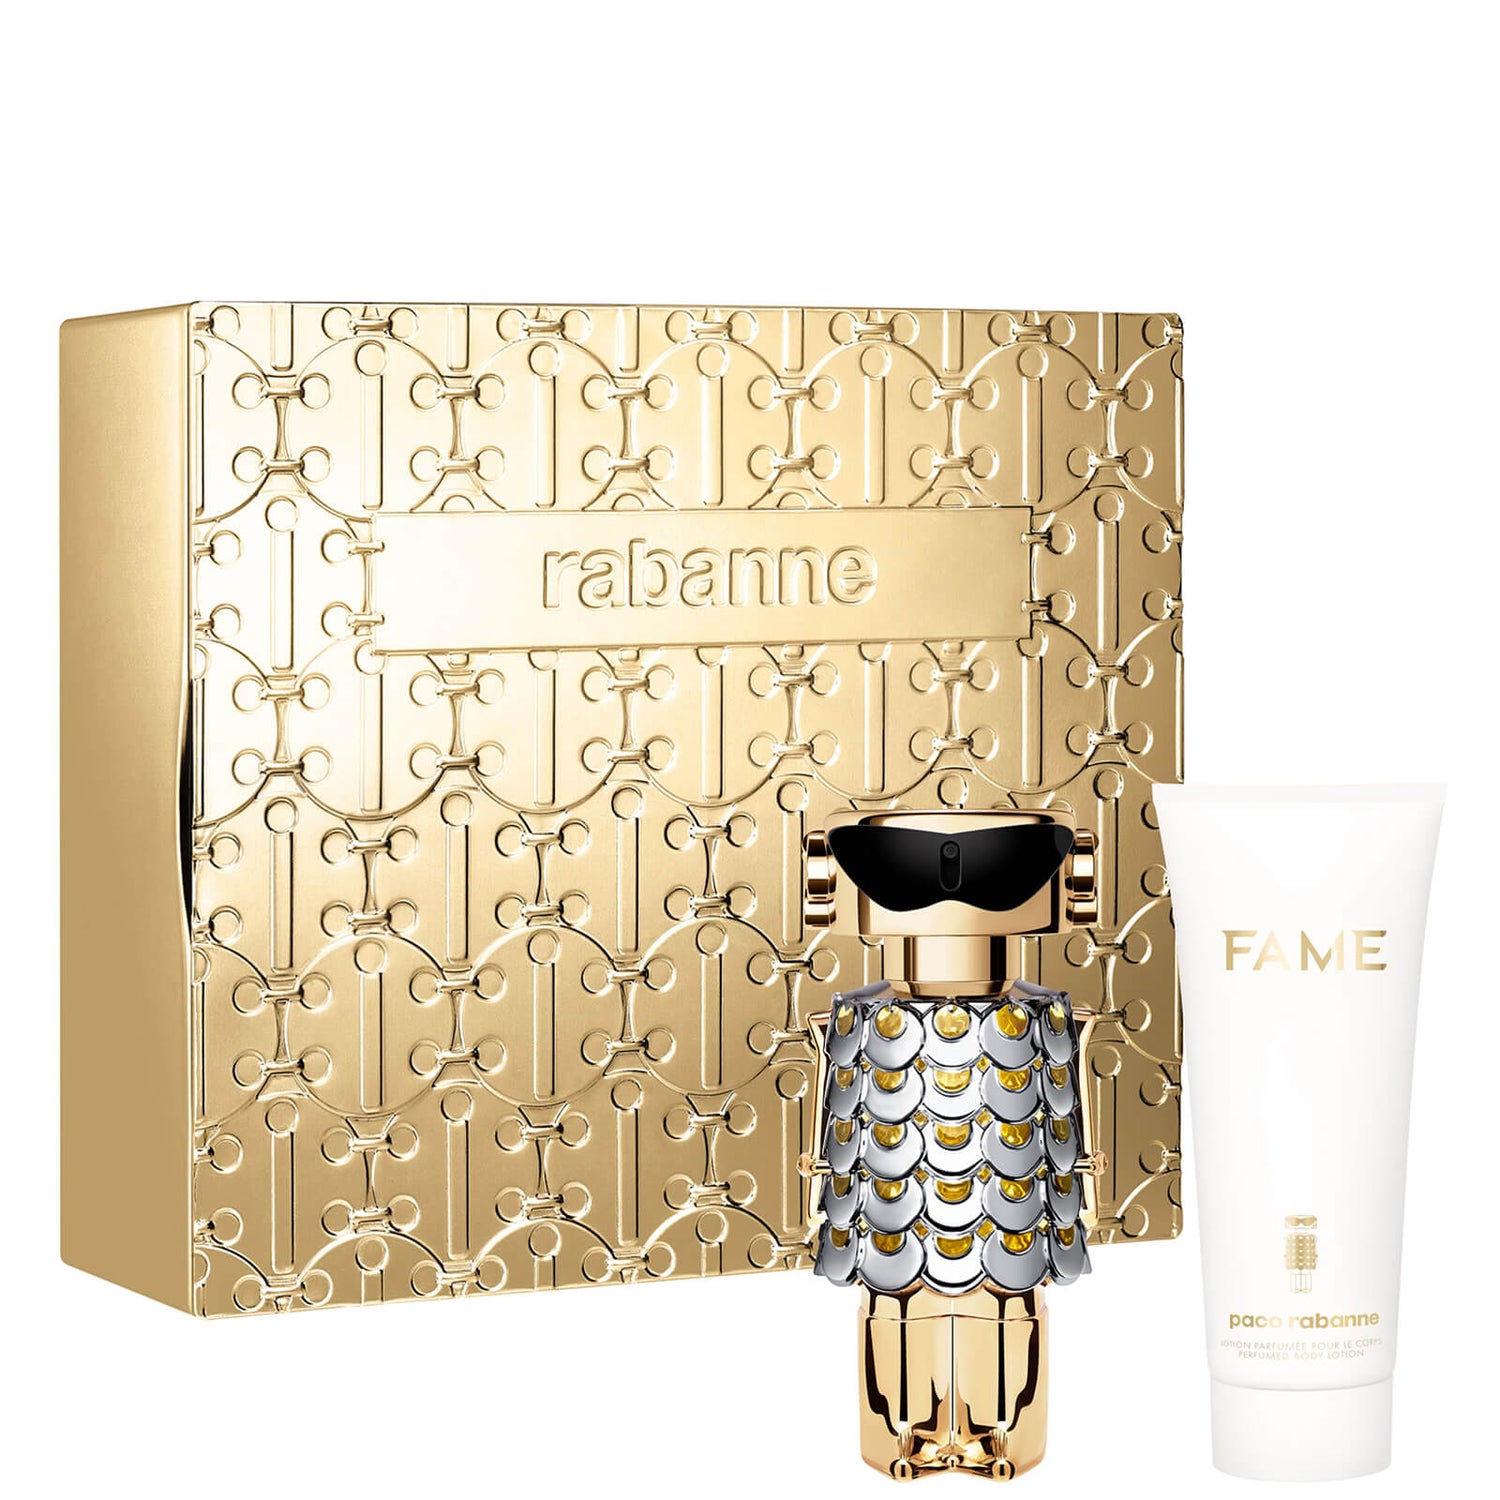 Paco Rabanne Fame Eau de Parfum 80ml Gift Set (Worth £137.00)